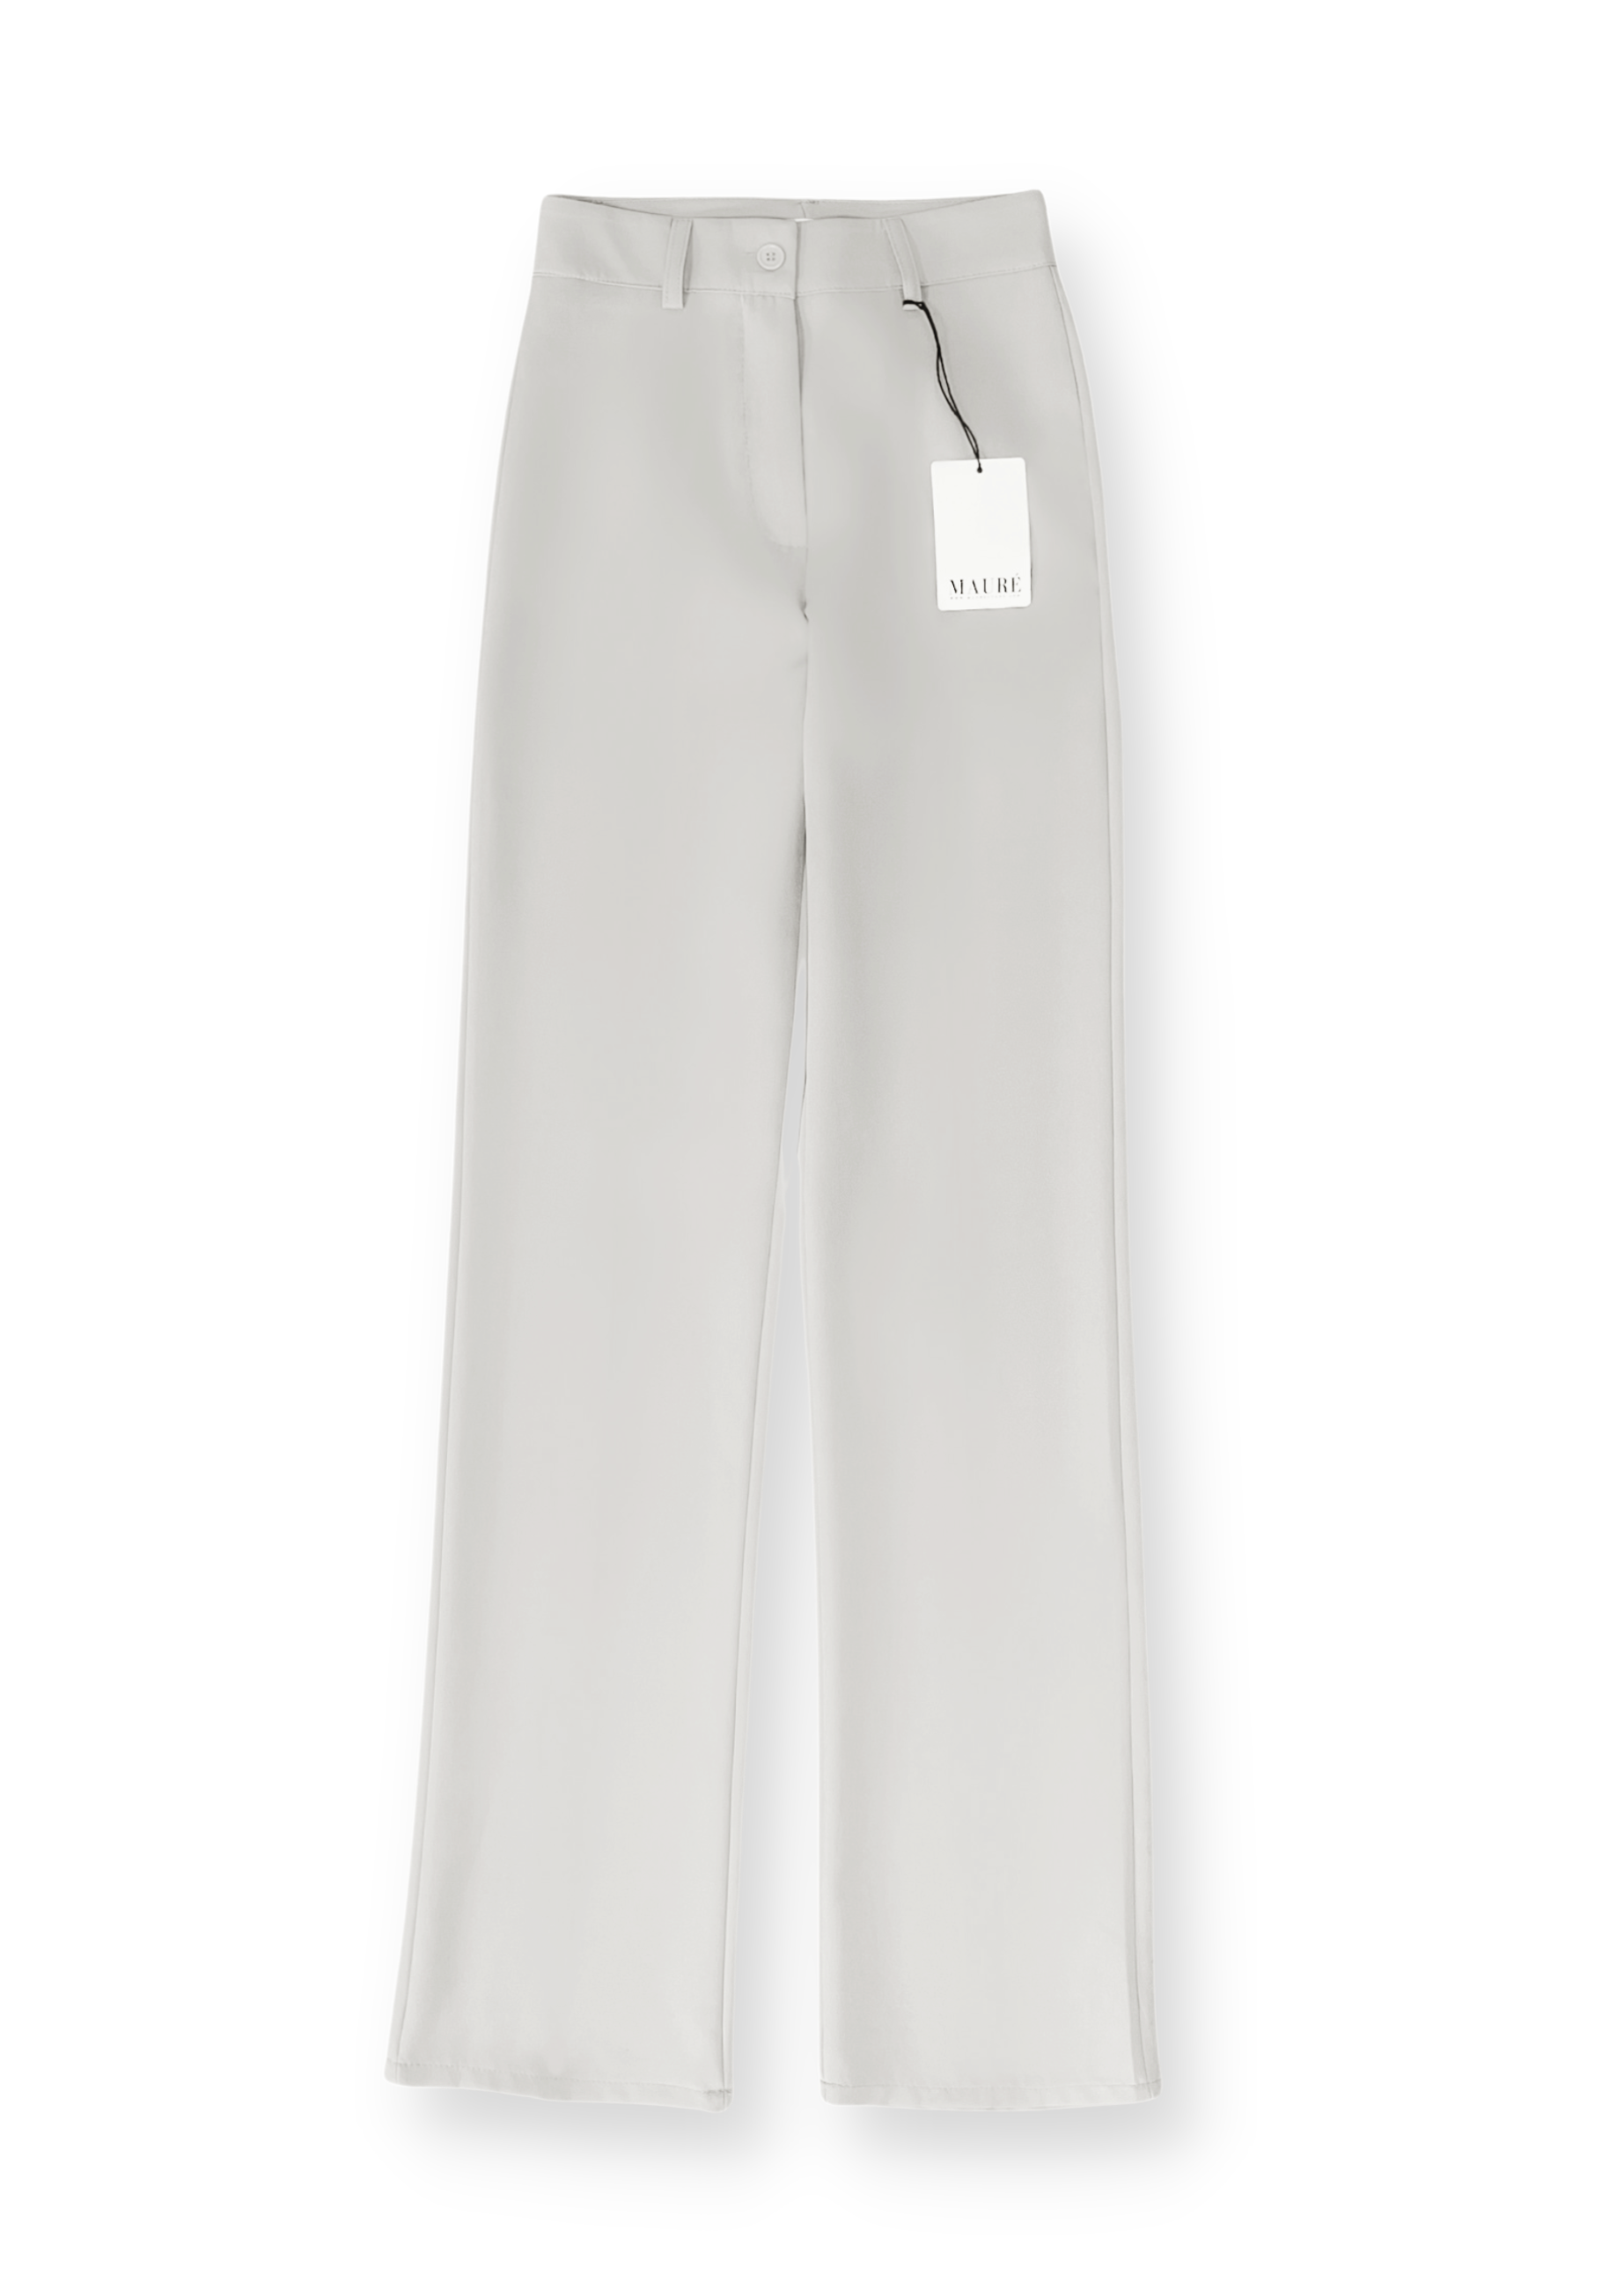 Straight leg pants classic creamy grey (TALL)